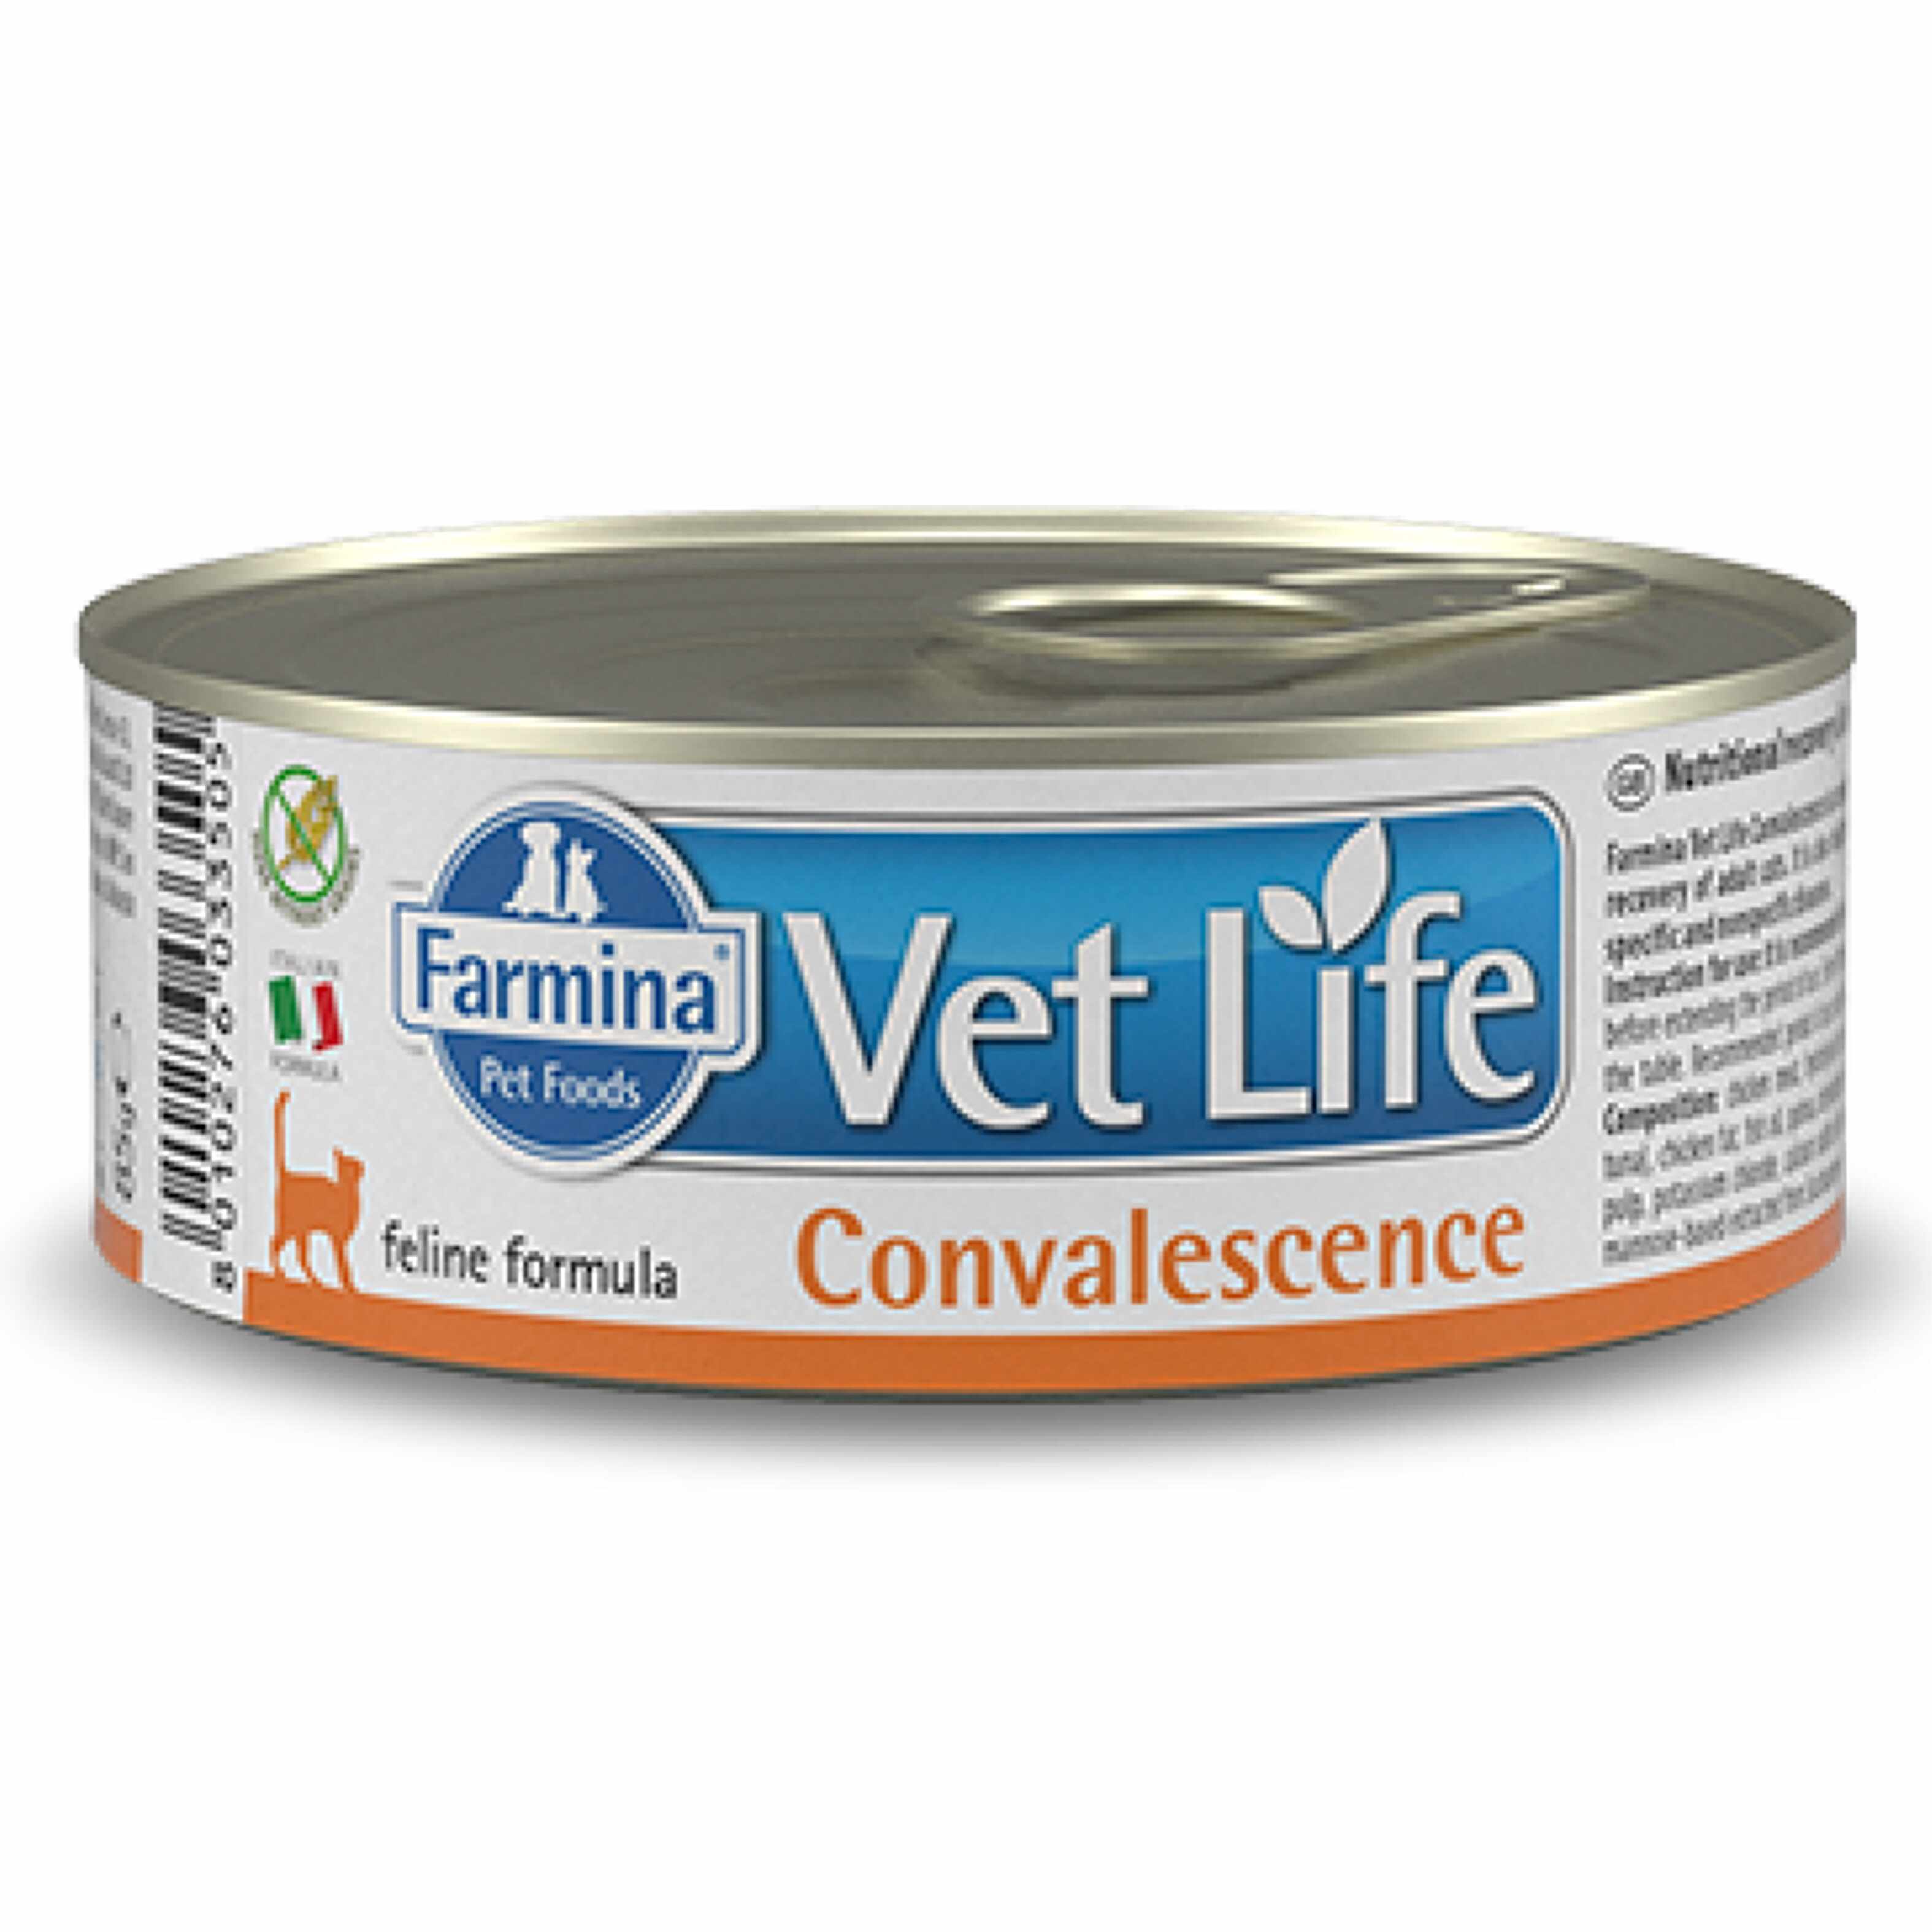 Vet Life Natural Diet Cat Convalescence, 85 g